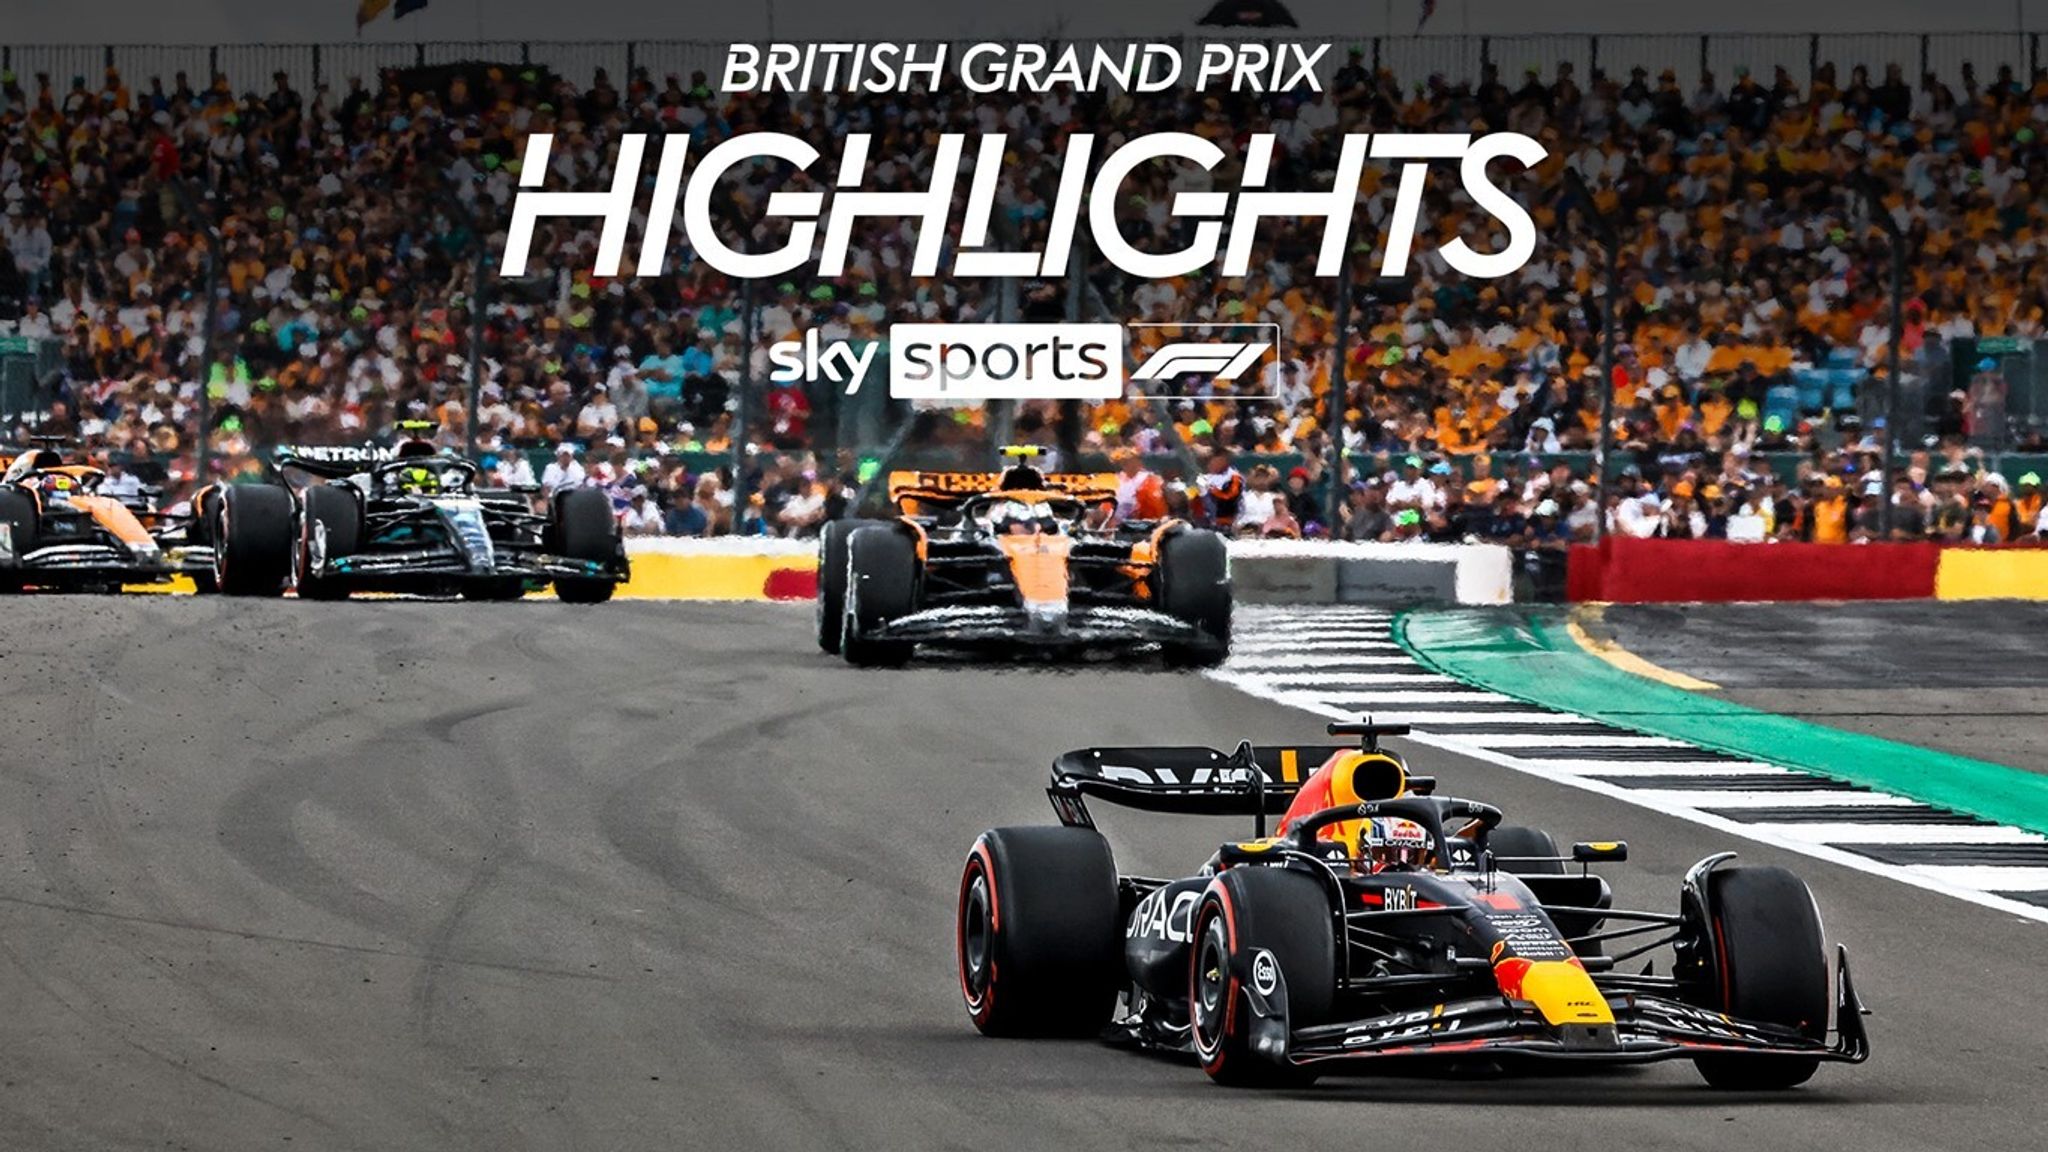 British Grand Prix Race Highlights Video Watch TV Show Sky Sports